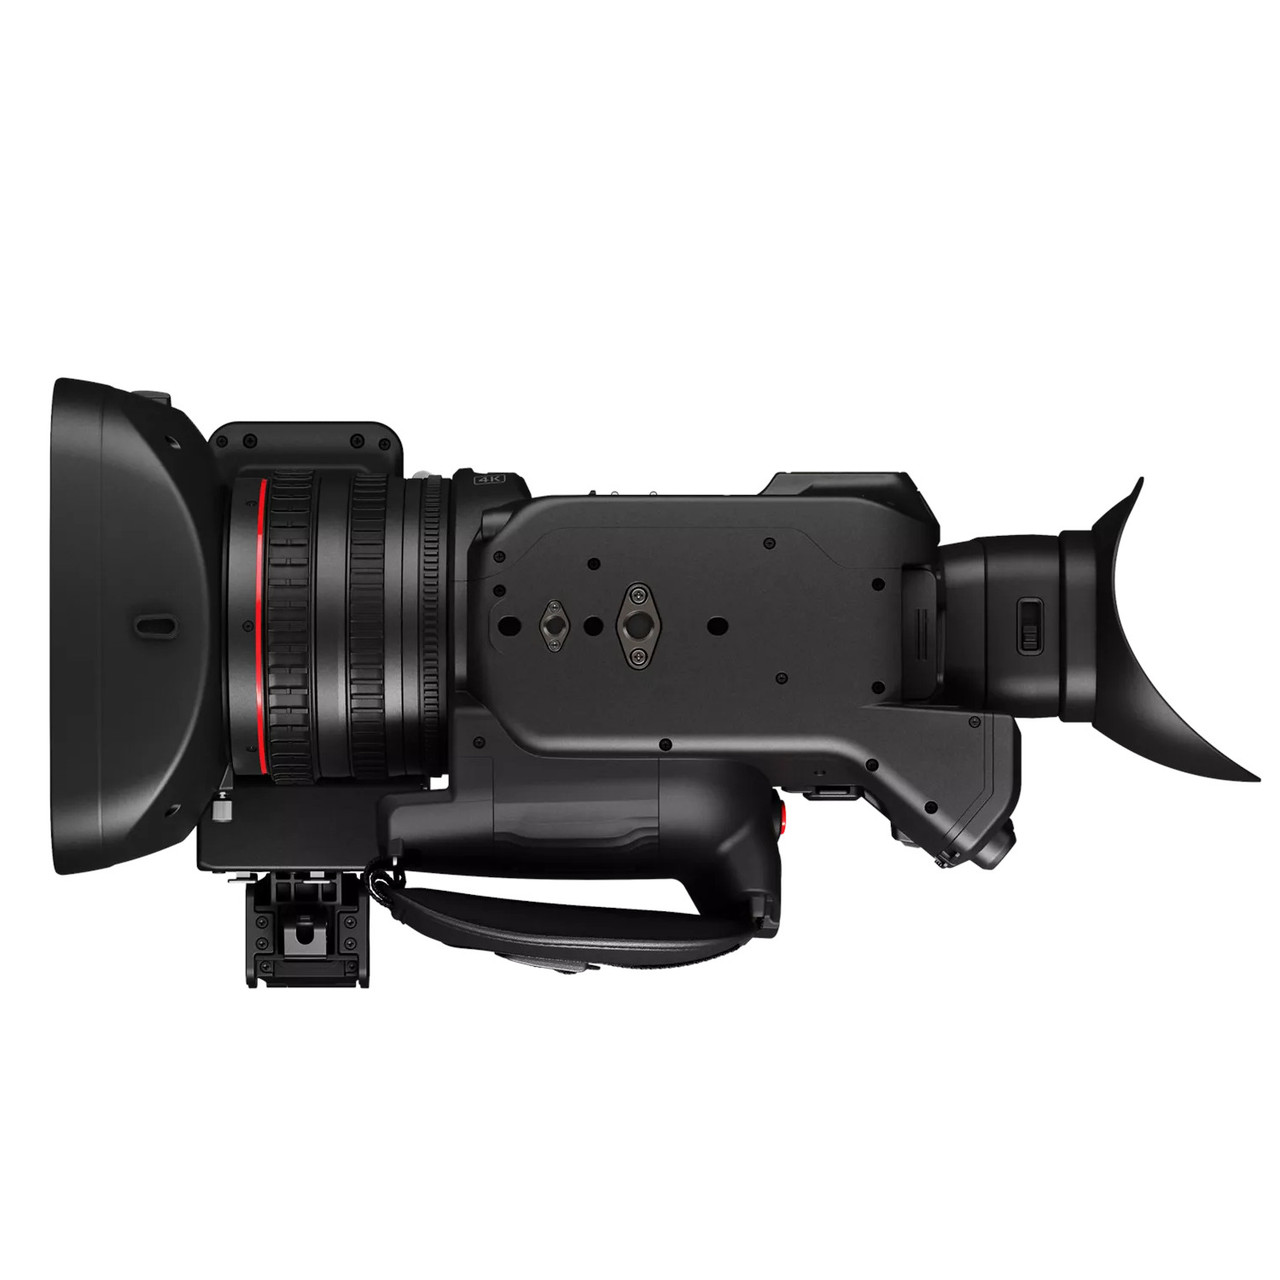 professional digital movie cameras